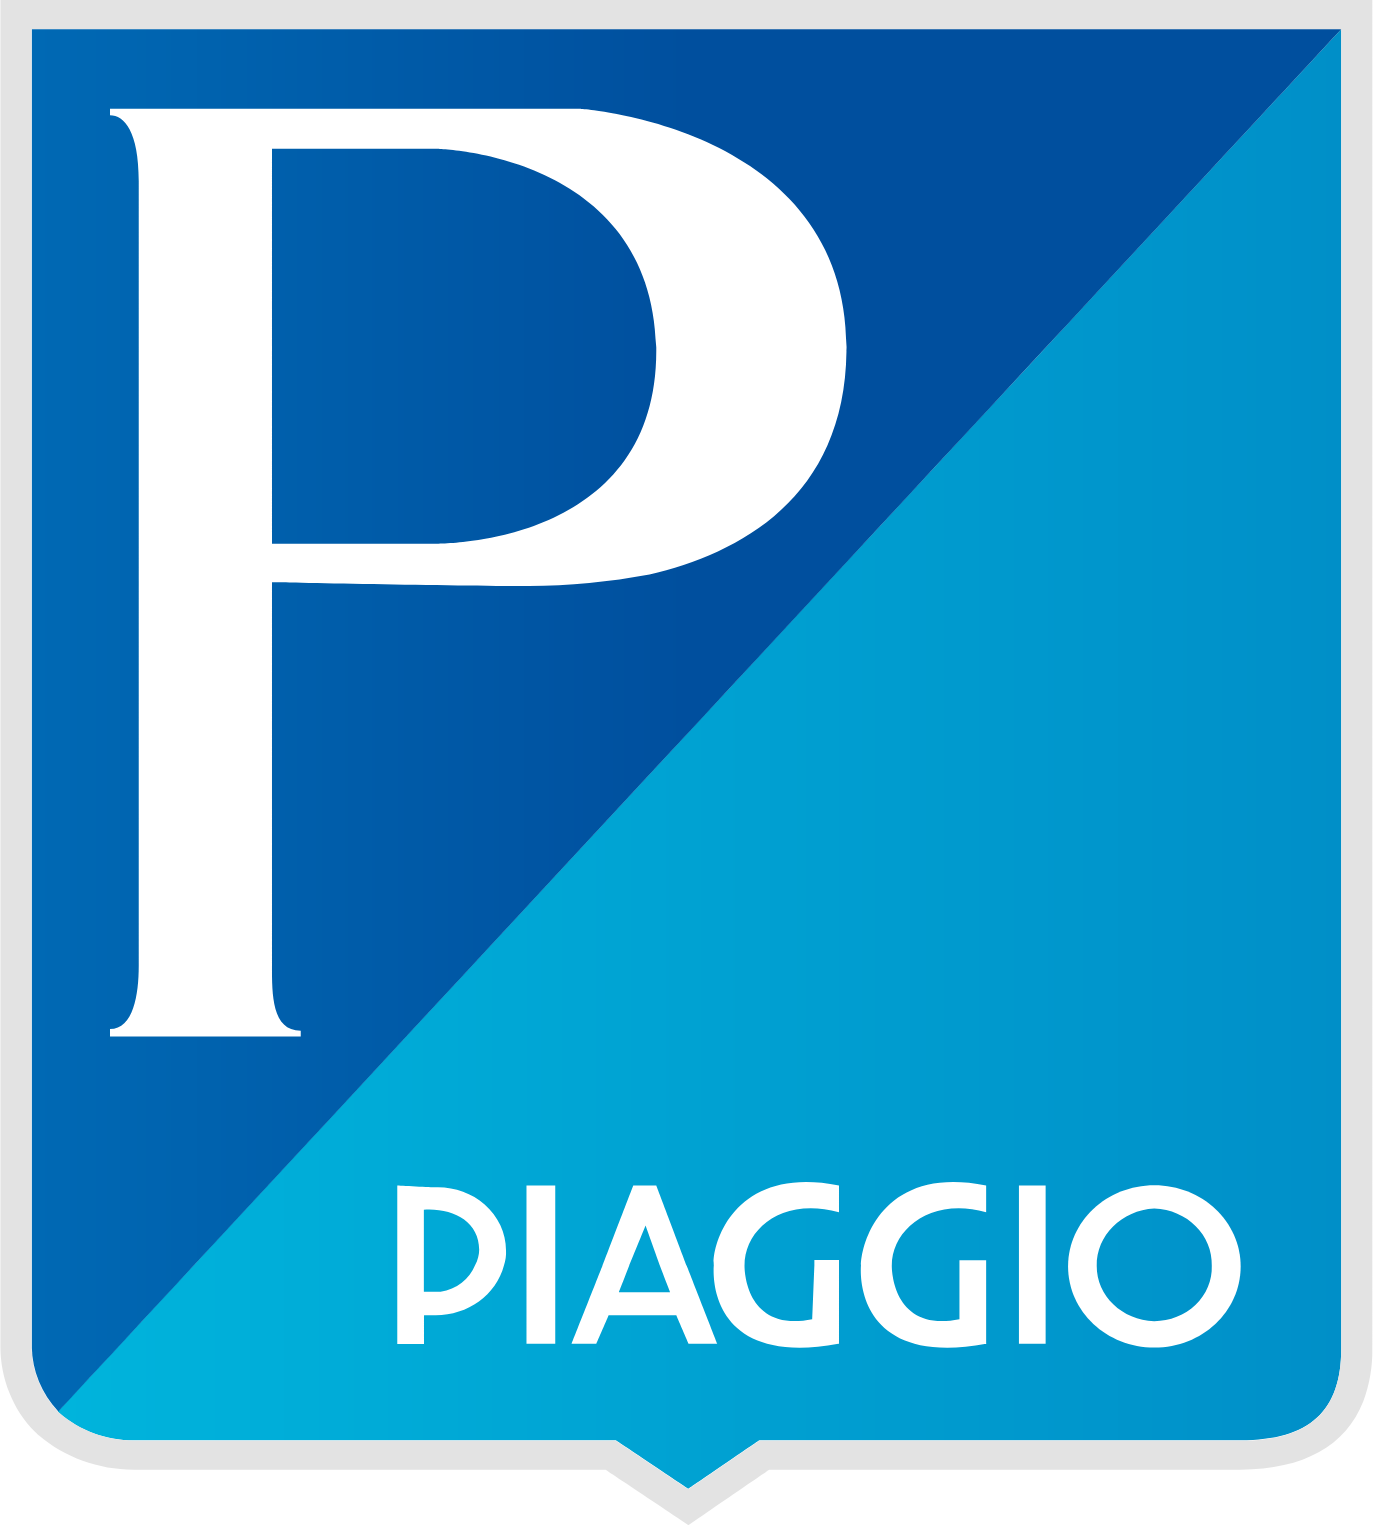 Piaggio logo (PNG transparent)